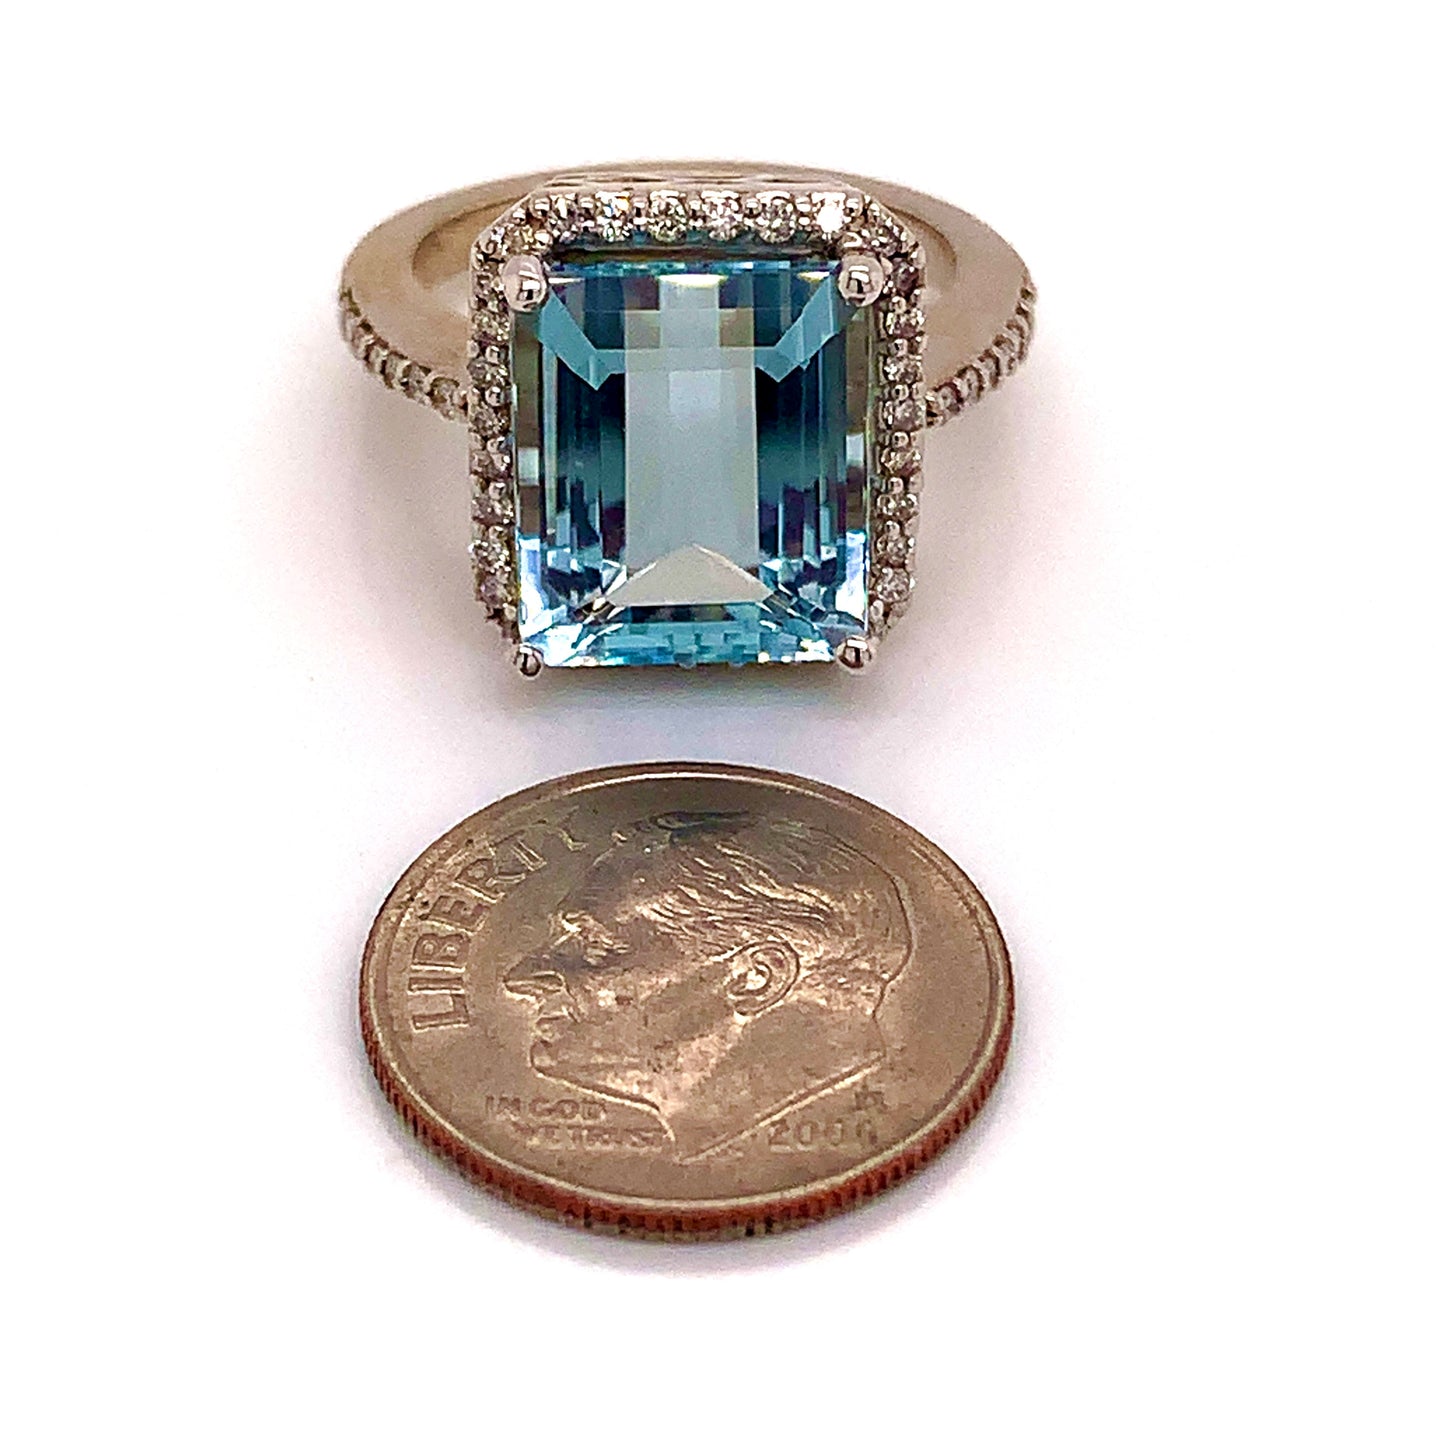 Aquamarine Diamond Ring 14k Gold Size 6.5, 6 TCW Certified $6,950 121105